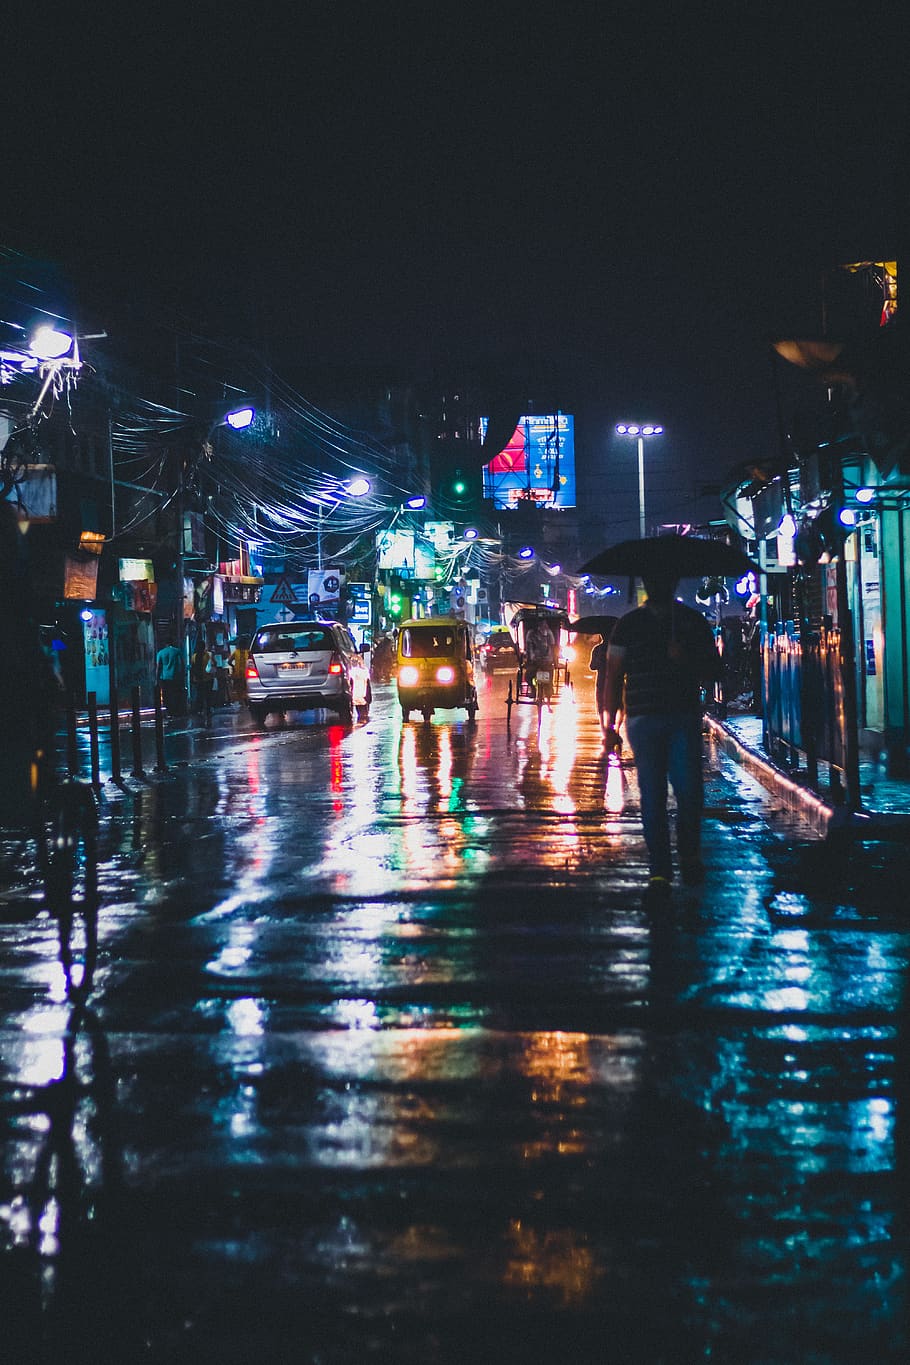 street, rainy day, rain, people at night, shadow, night, illuminated, city, architecture, transportation